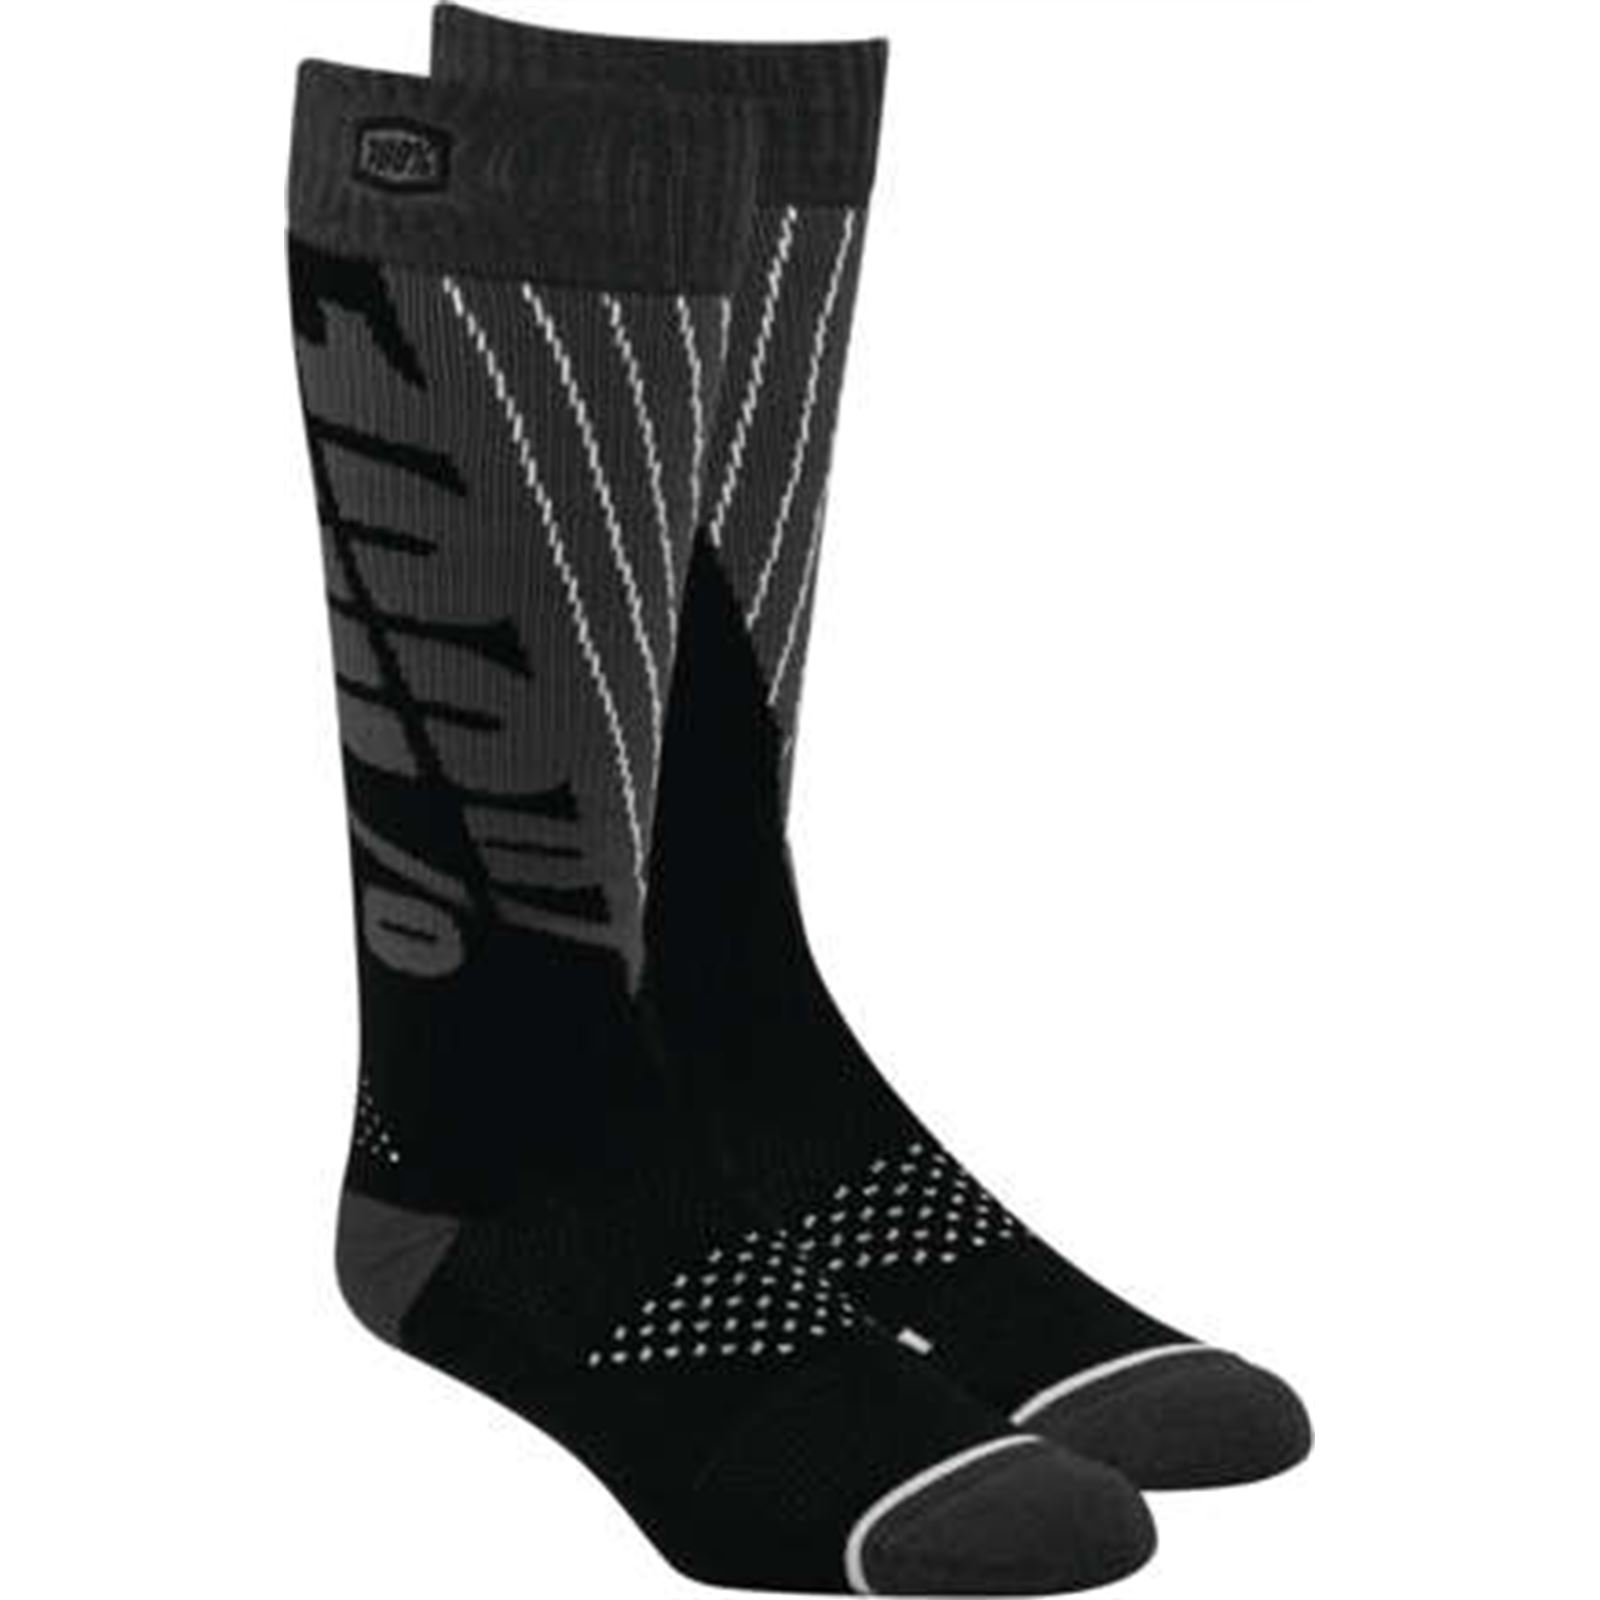 100% Torque Comfort Moto Socks - Black/Grey - Small/Medium